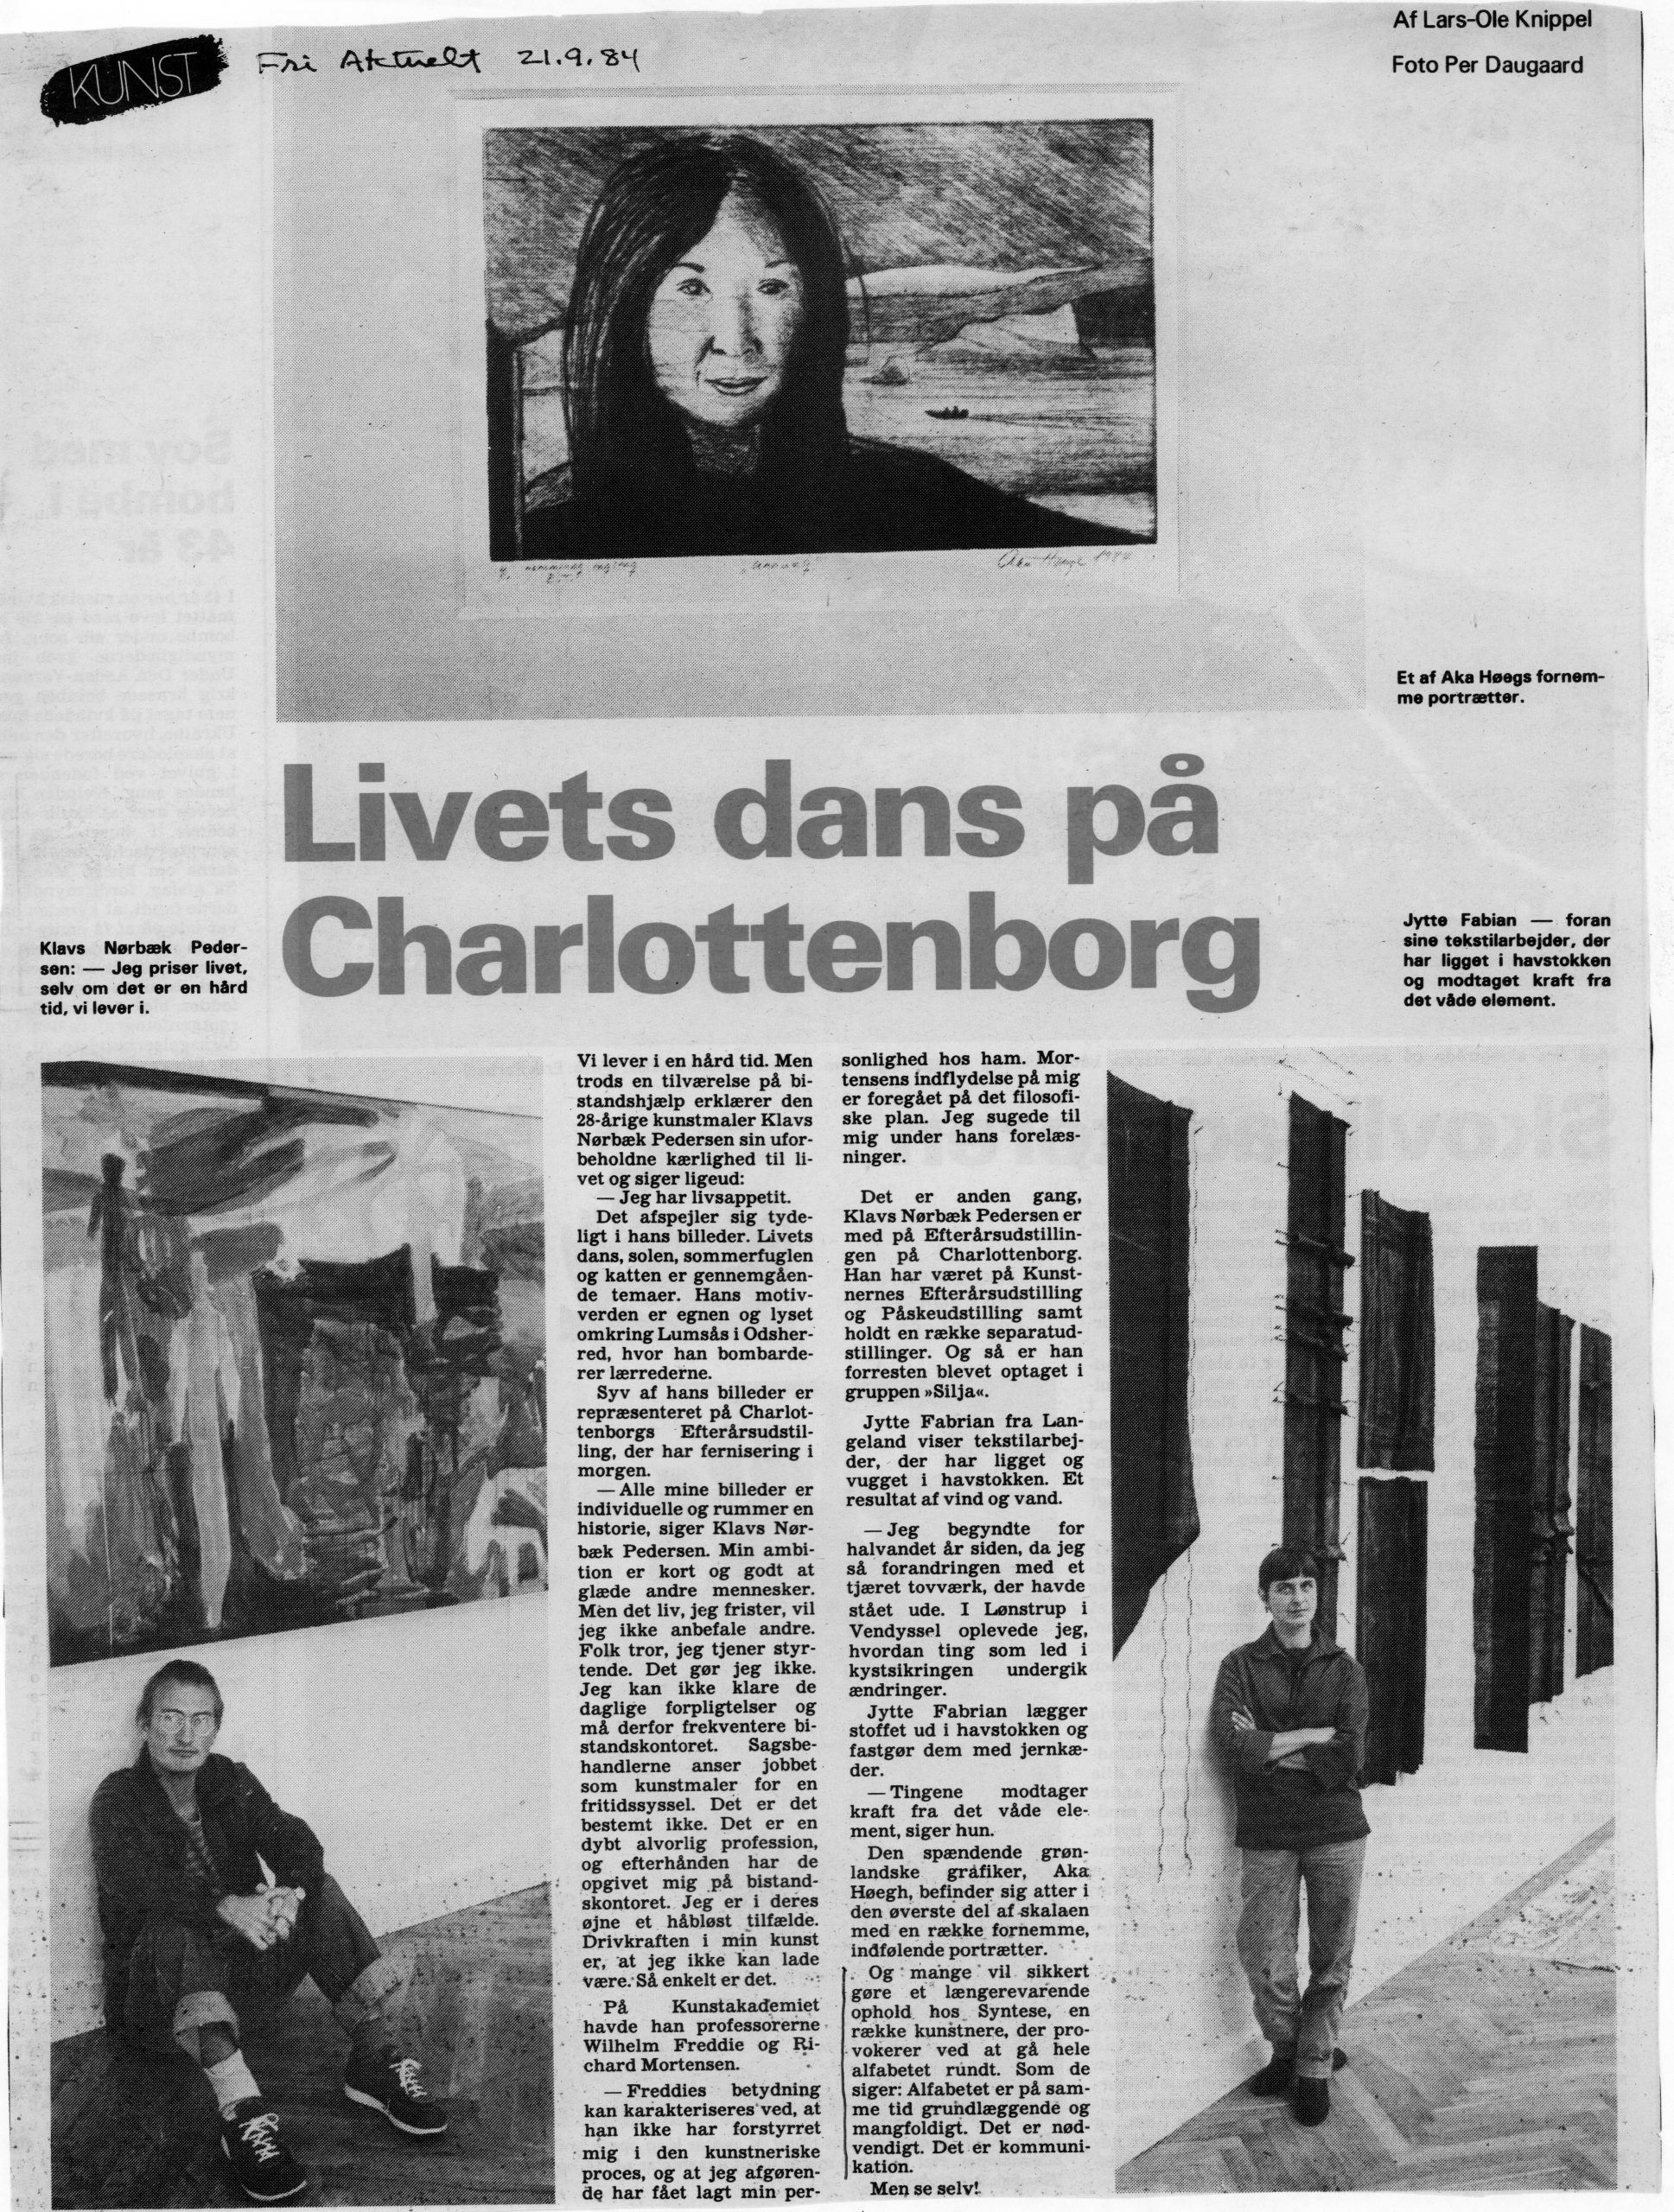 Livets dans på Charlottenborg. Anmeldelse (Charlottensborgs Efterårsudstilling 1984. Charlottenborg, København). Lars-Ole Knippel. Det Fri Aktuelt.